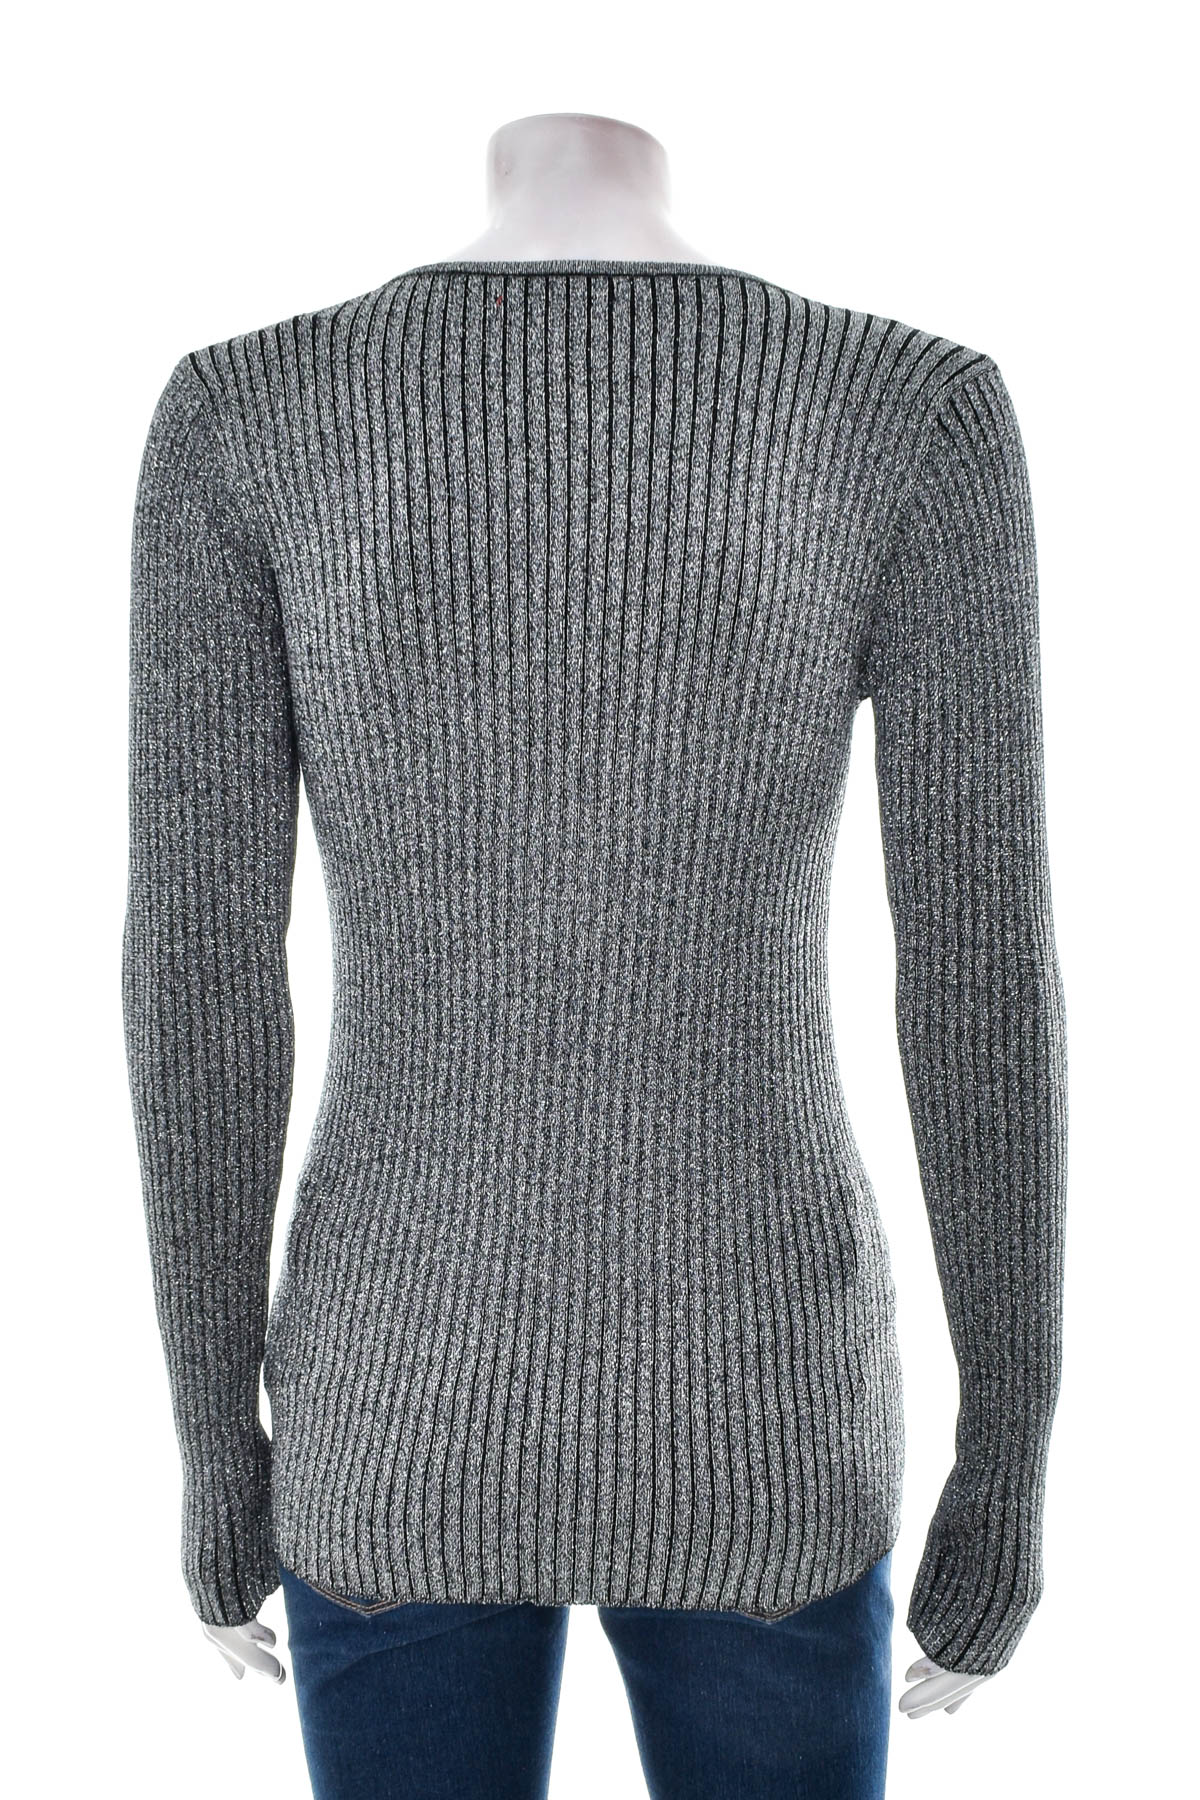 Women's sweater - GUESS - 1